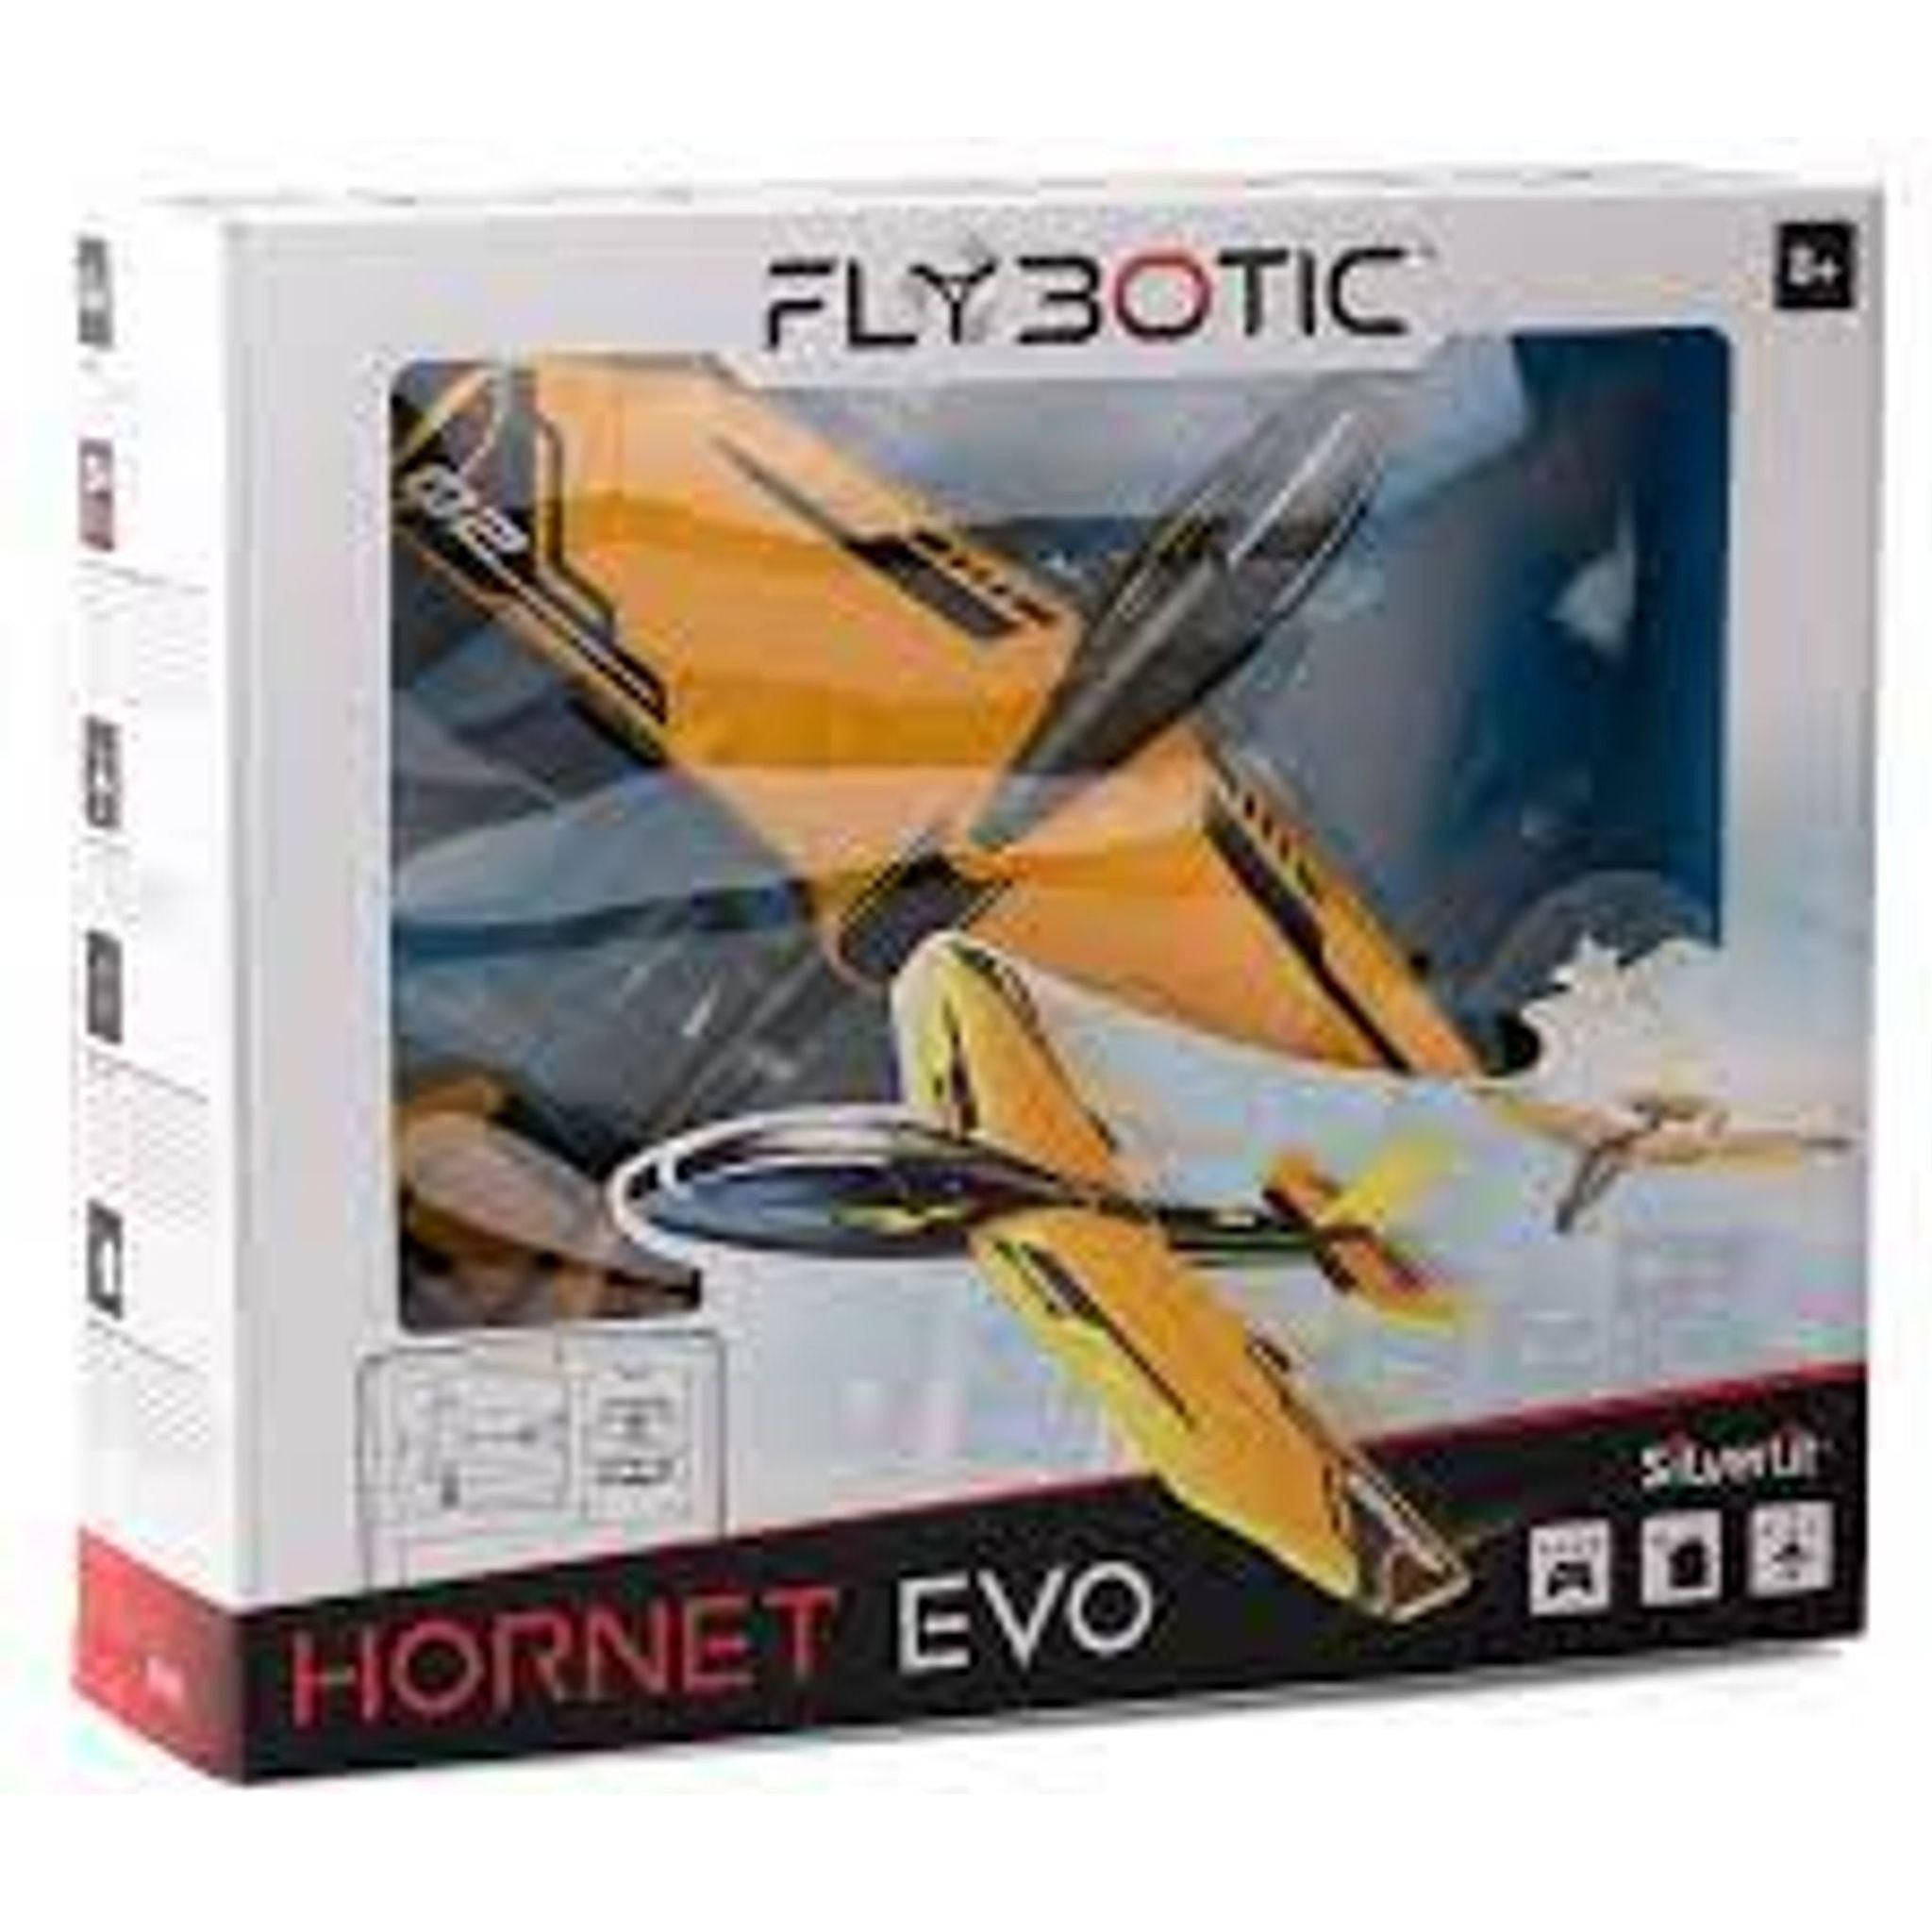 SILVERLIT Hornet Evo - Toybox Tales